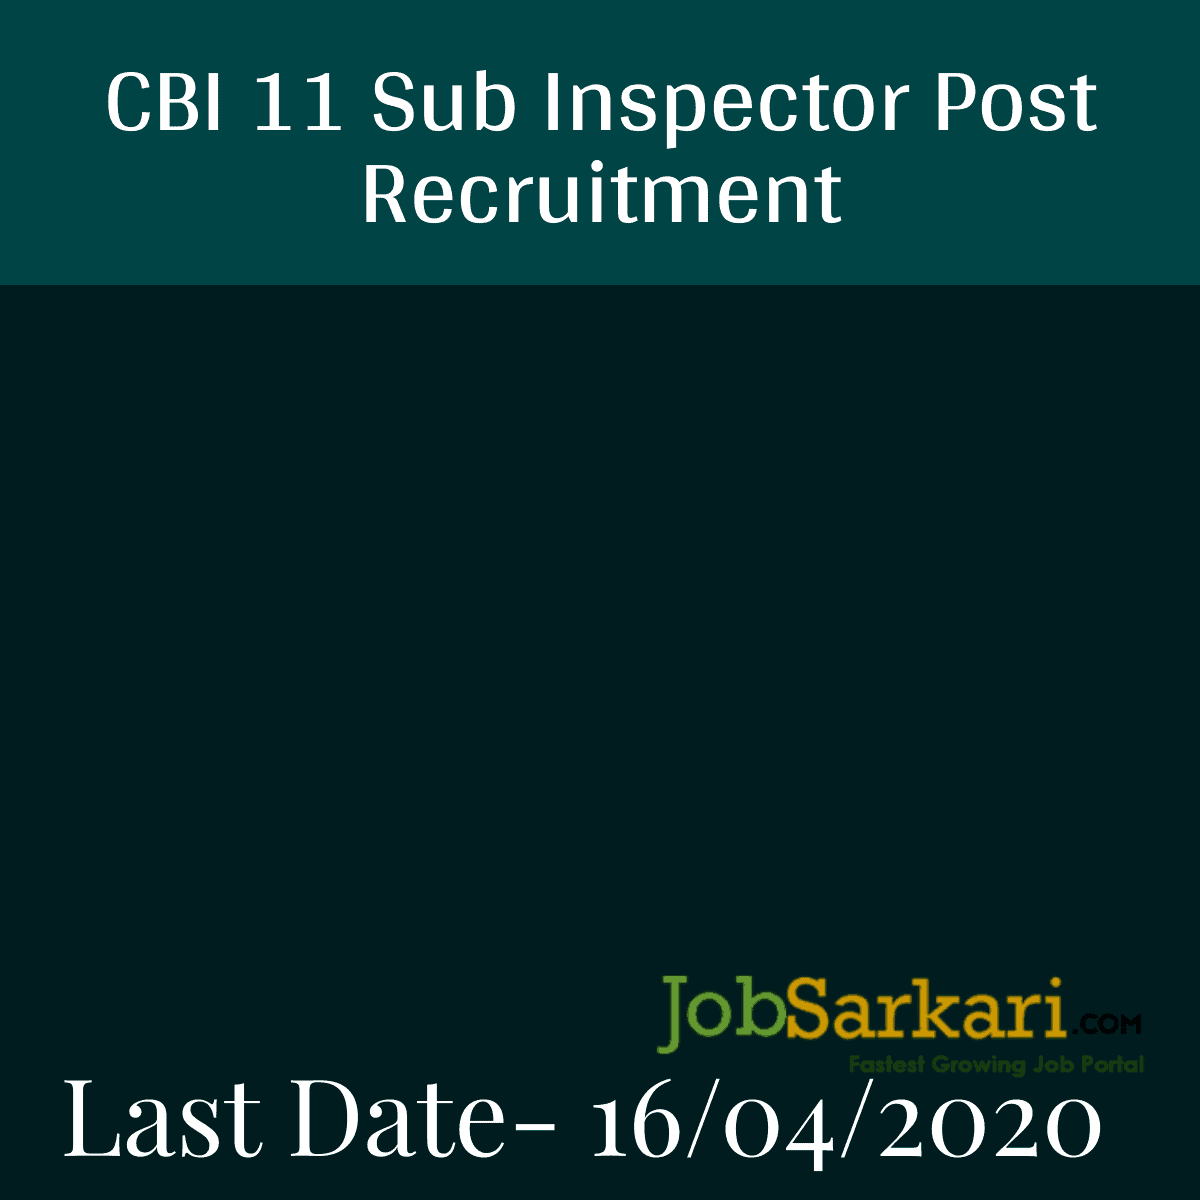 CBI Recruitment 2020 For Sub Inspector Post 1